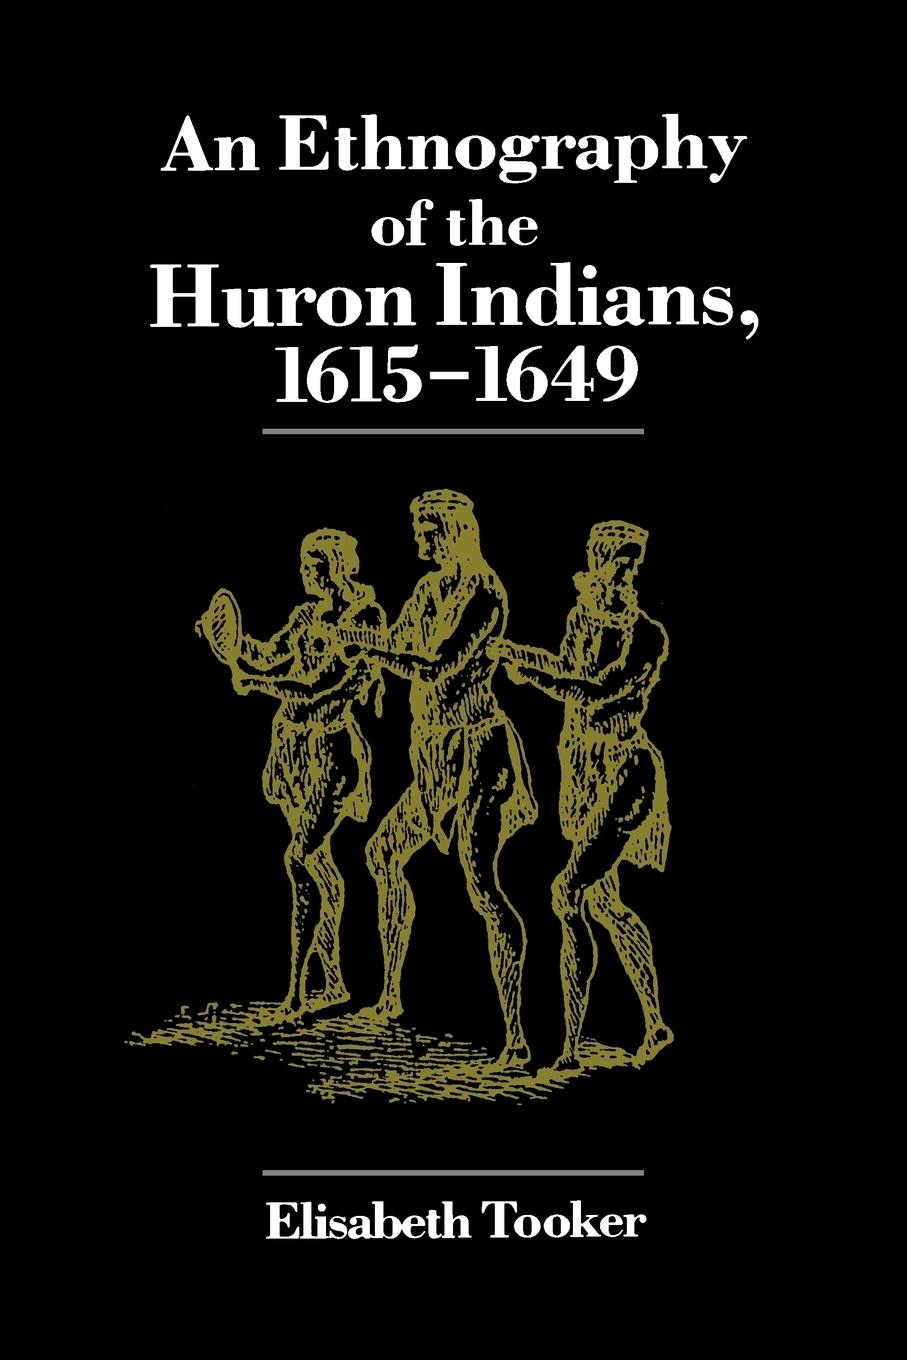 Ethnography of the Huron Indians - Tooker, Elisabeth